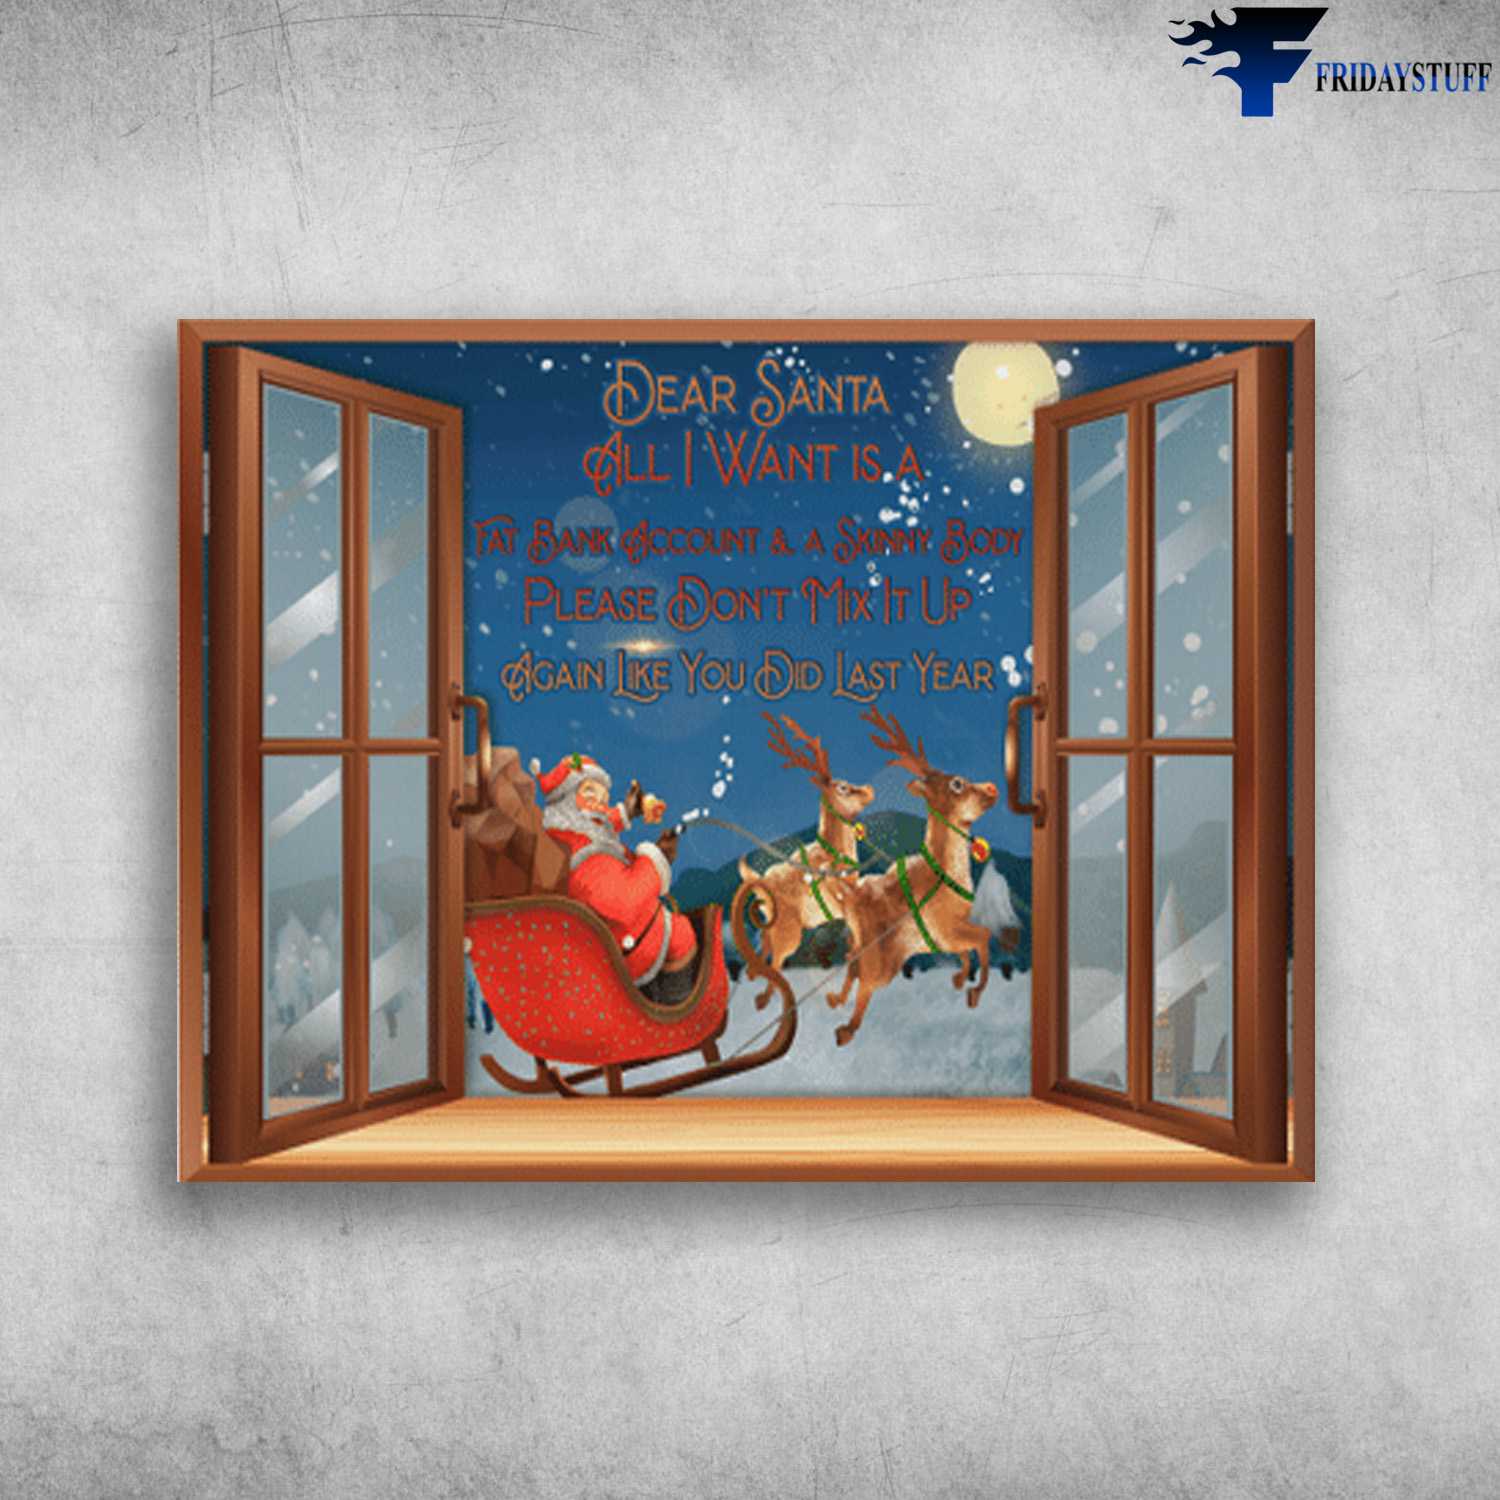 Christmas Poster, Santa Claus - Dear Santa, All I Want Is A Fat Bank Account, And A Skinny Body